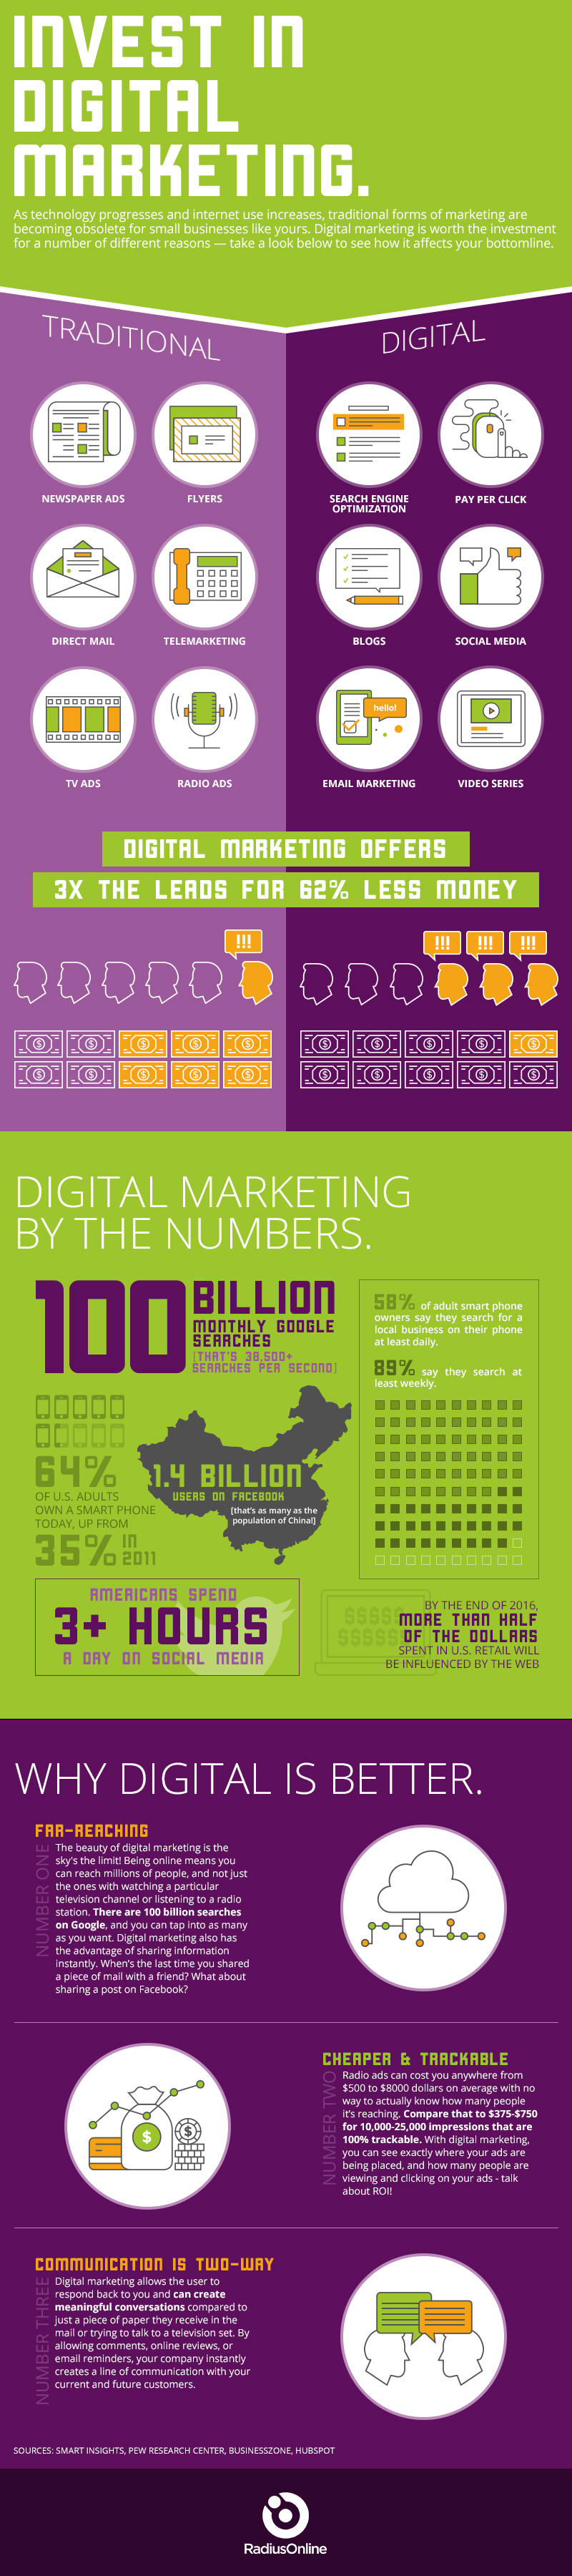 Digital vs Traditional Marketing Infographic